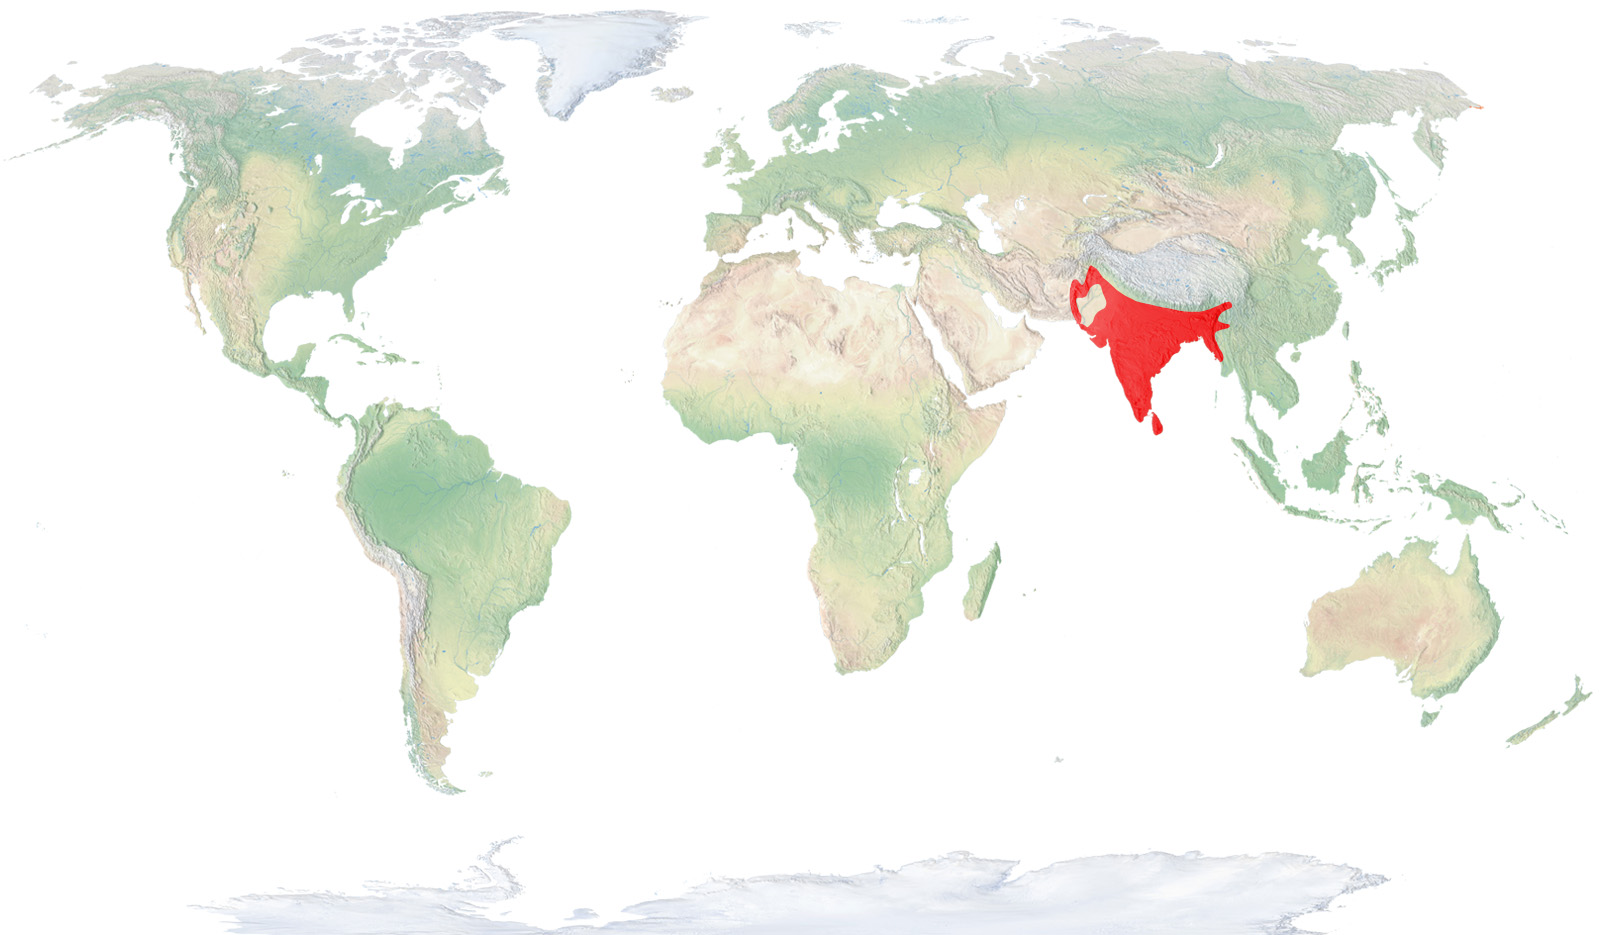 Pakistan, India, Nepal and Sri Lanka